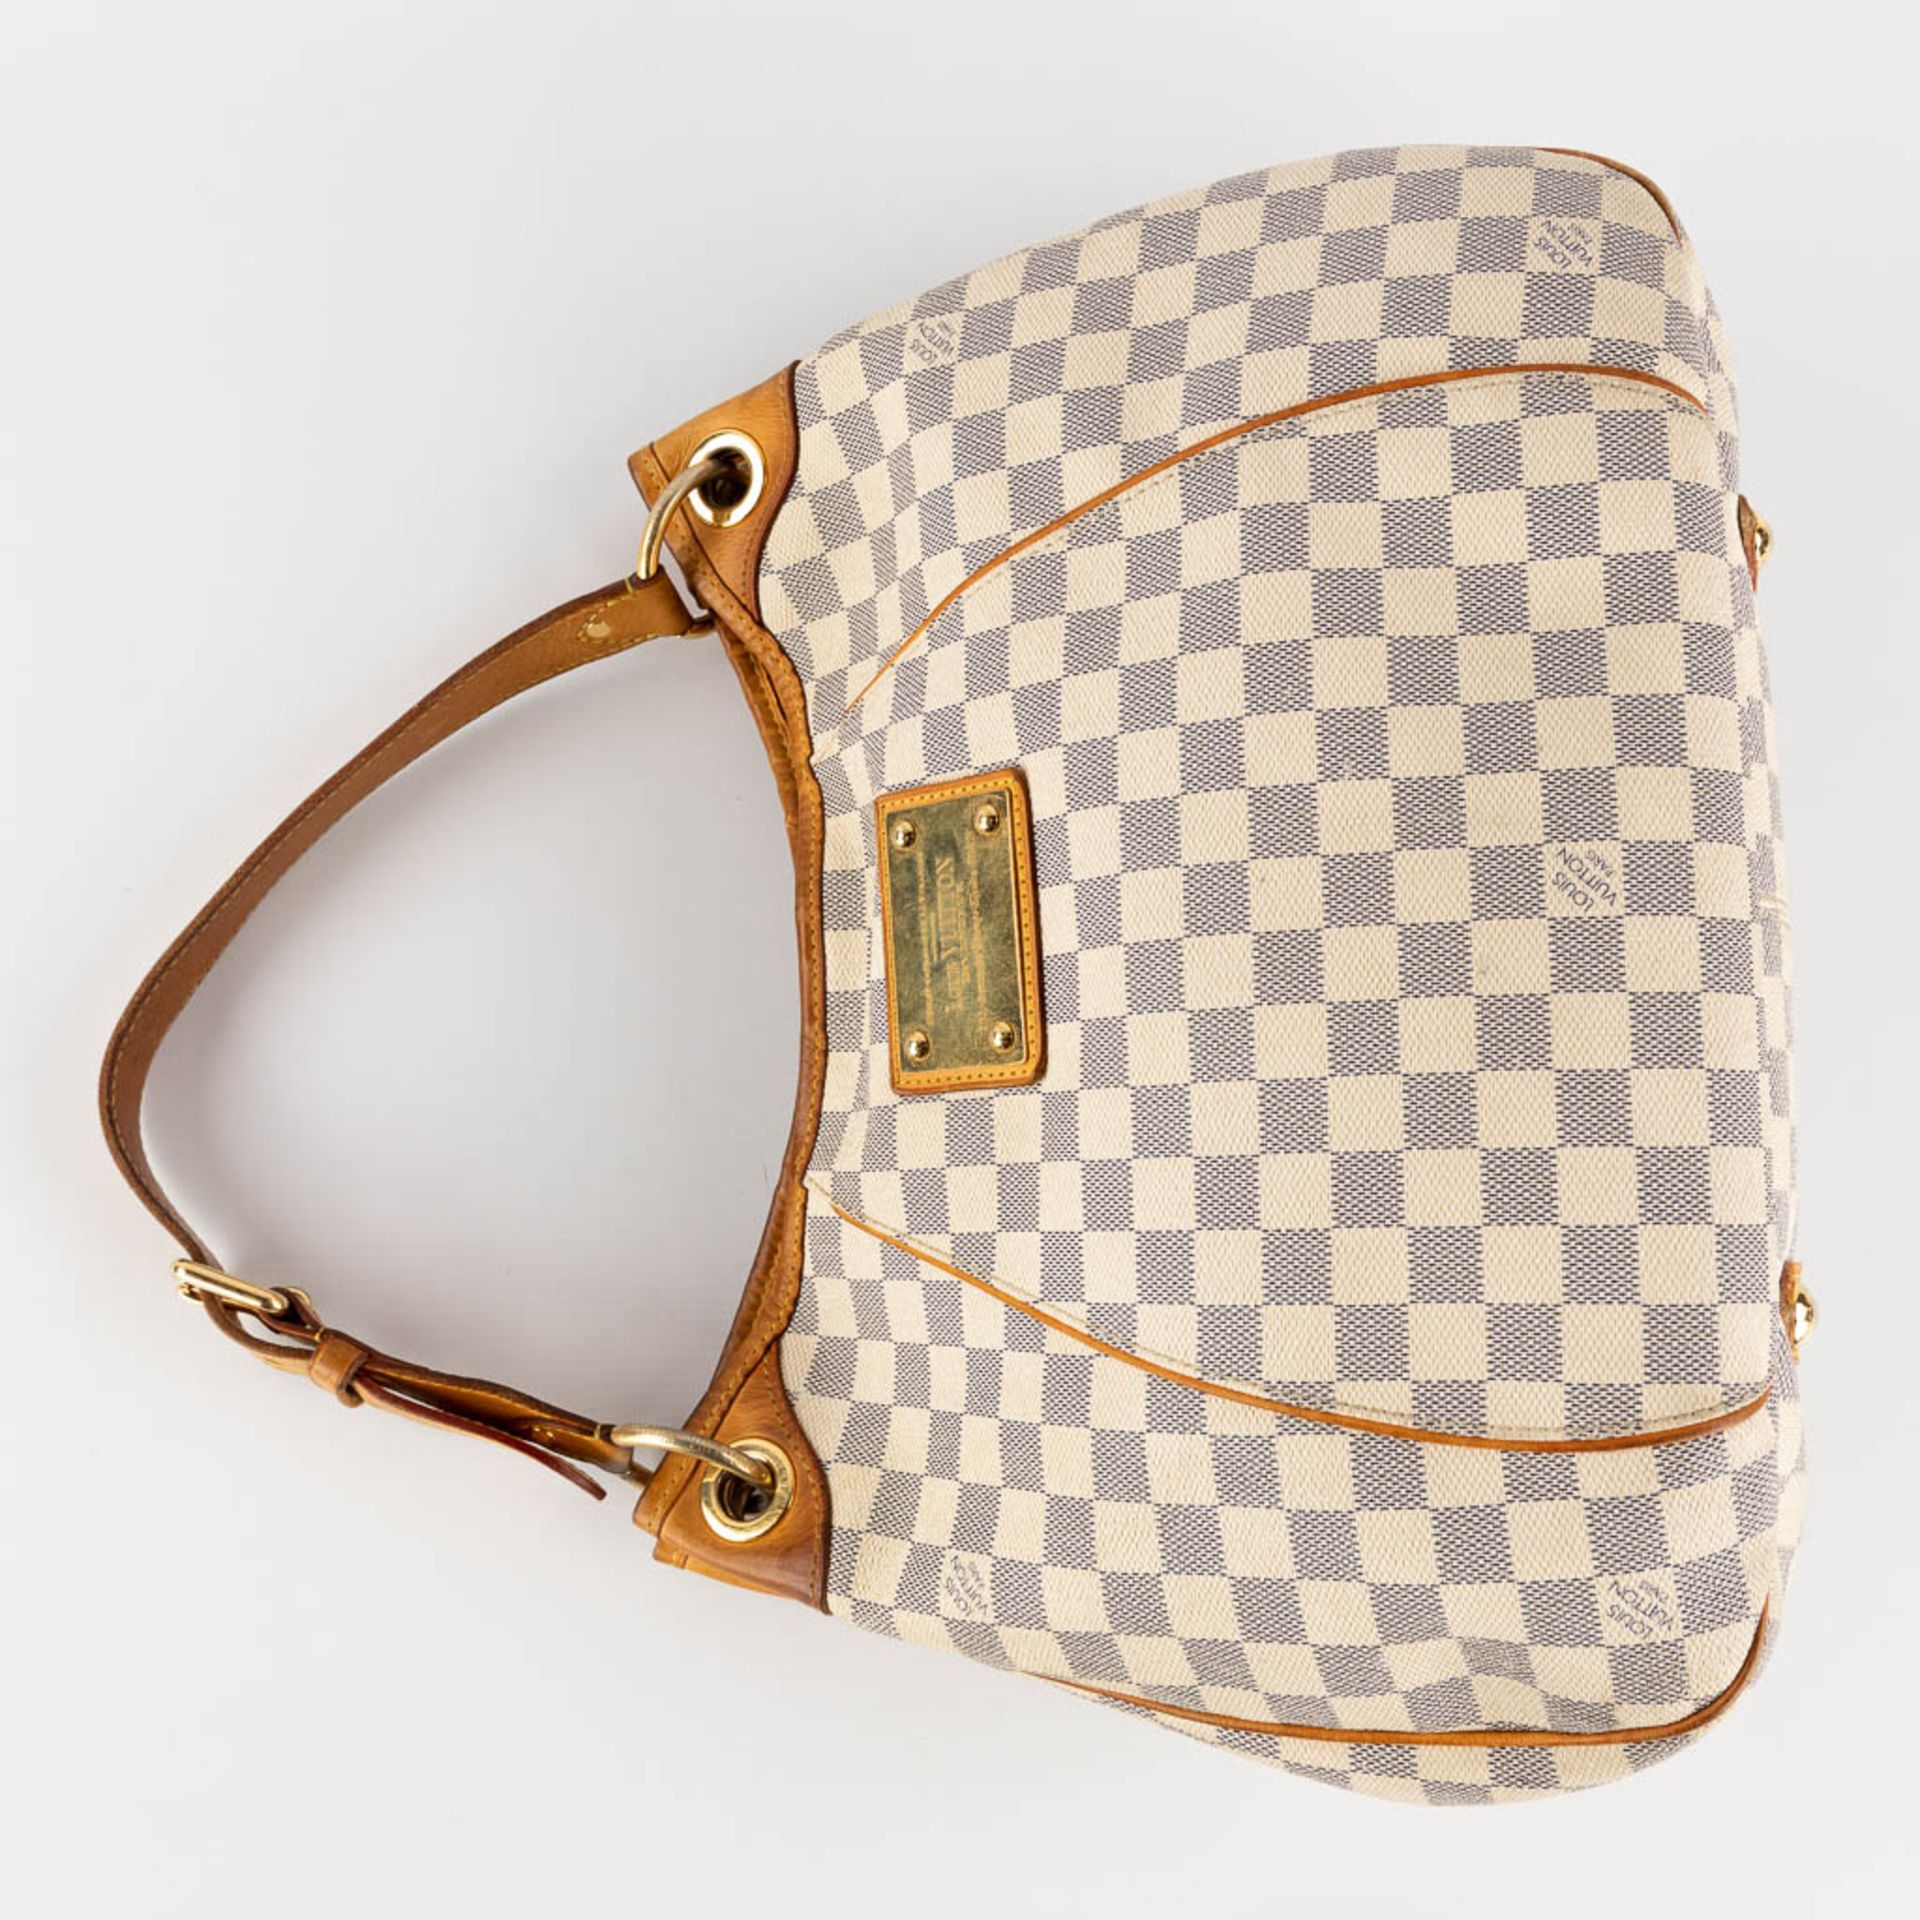 Louis Vuitton, Galleria, a handbag made of Damier Azur. (W:39 x H:30 cm) - Bild 10 aus 18